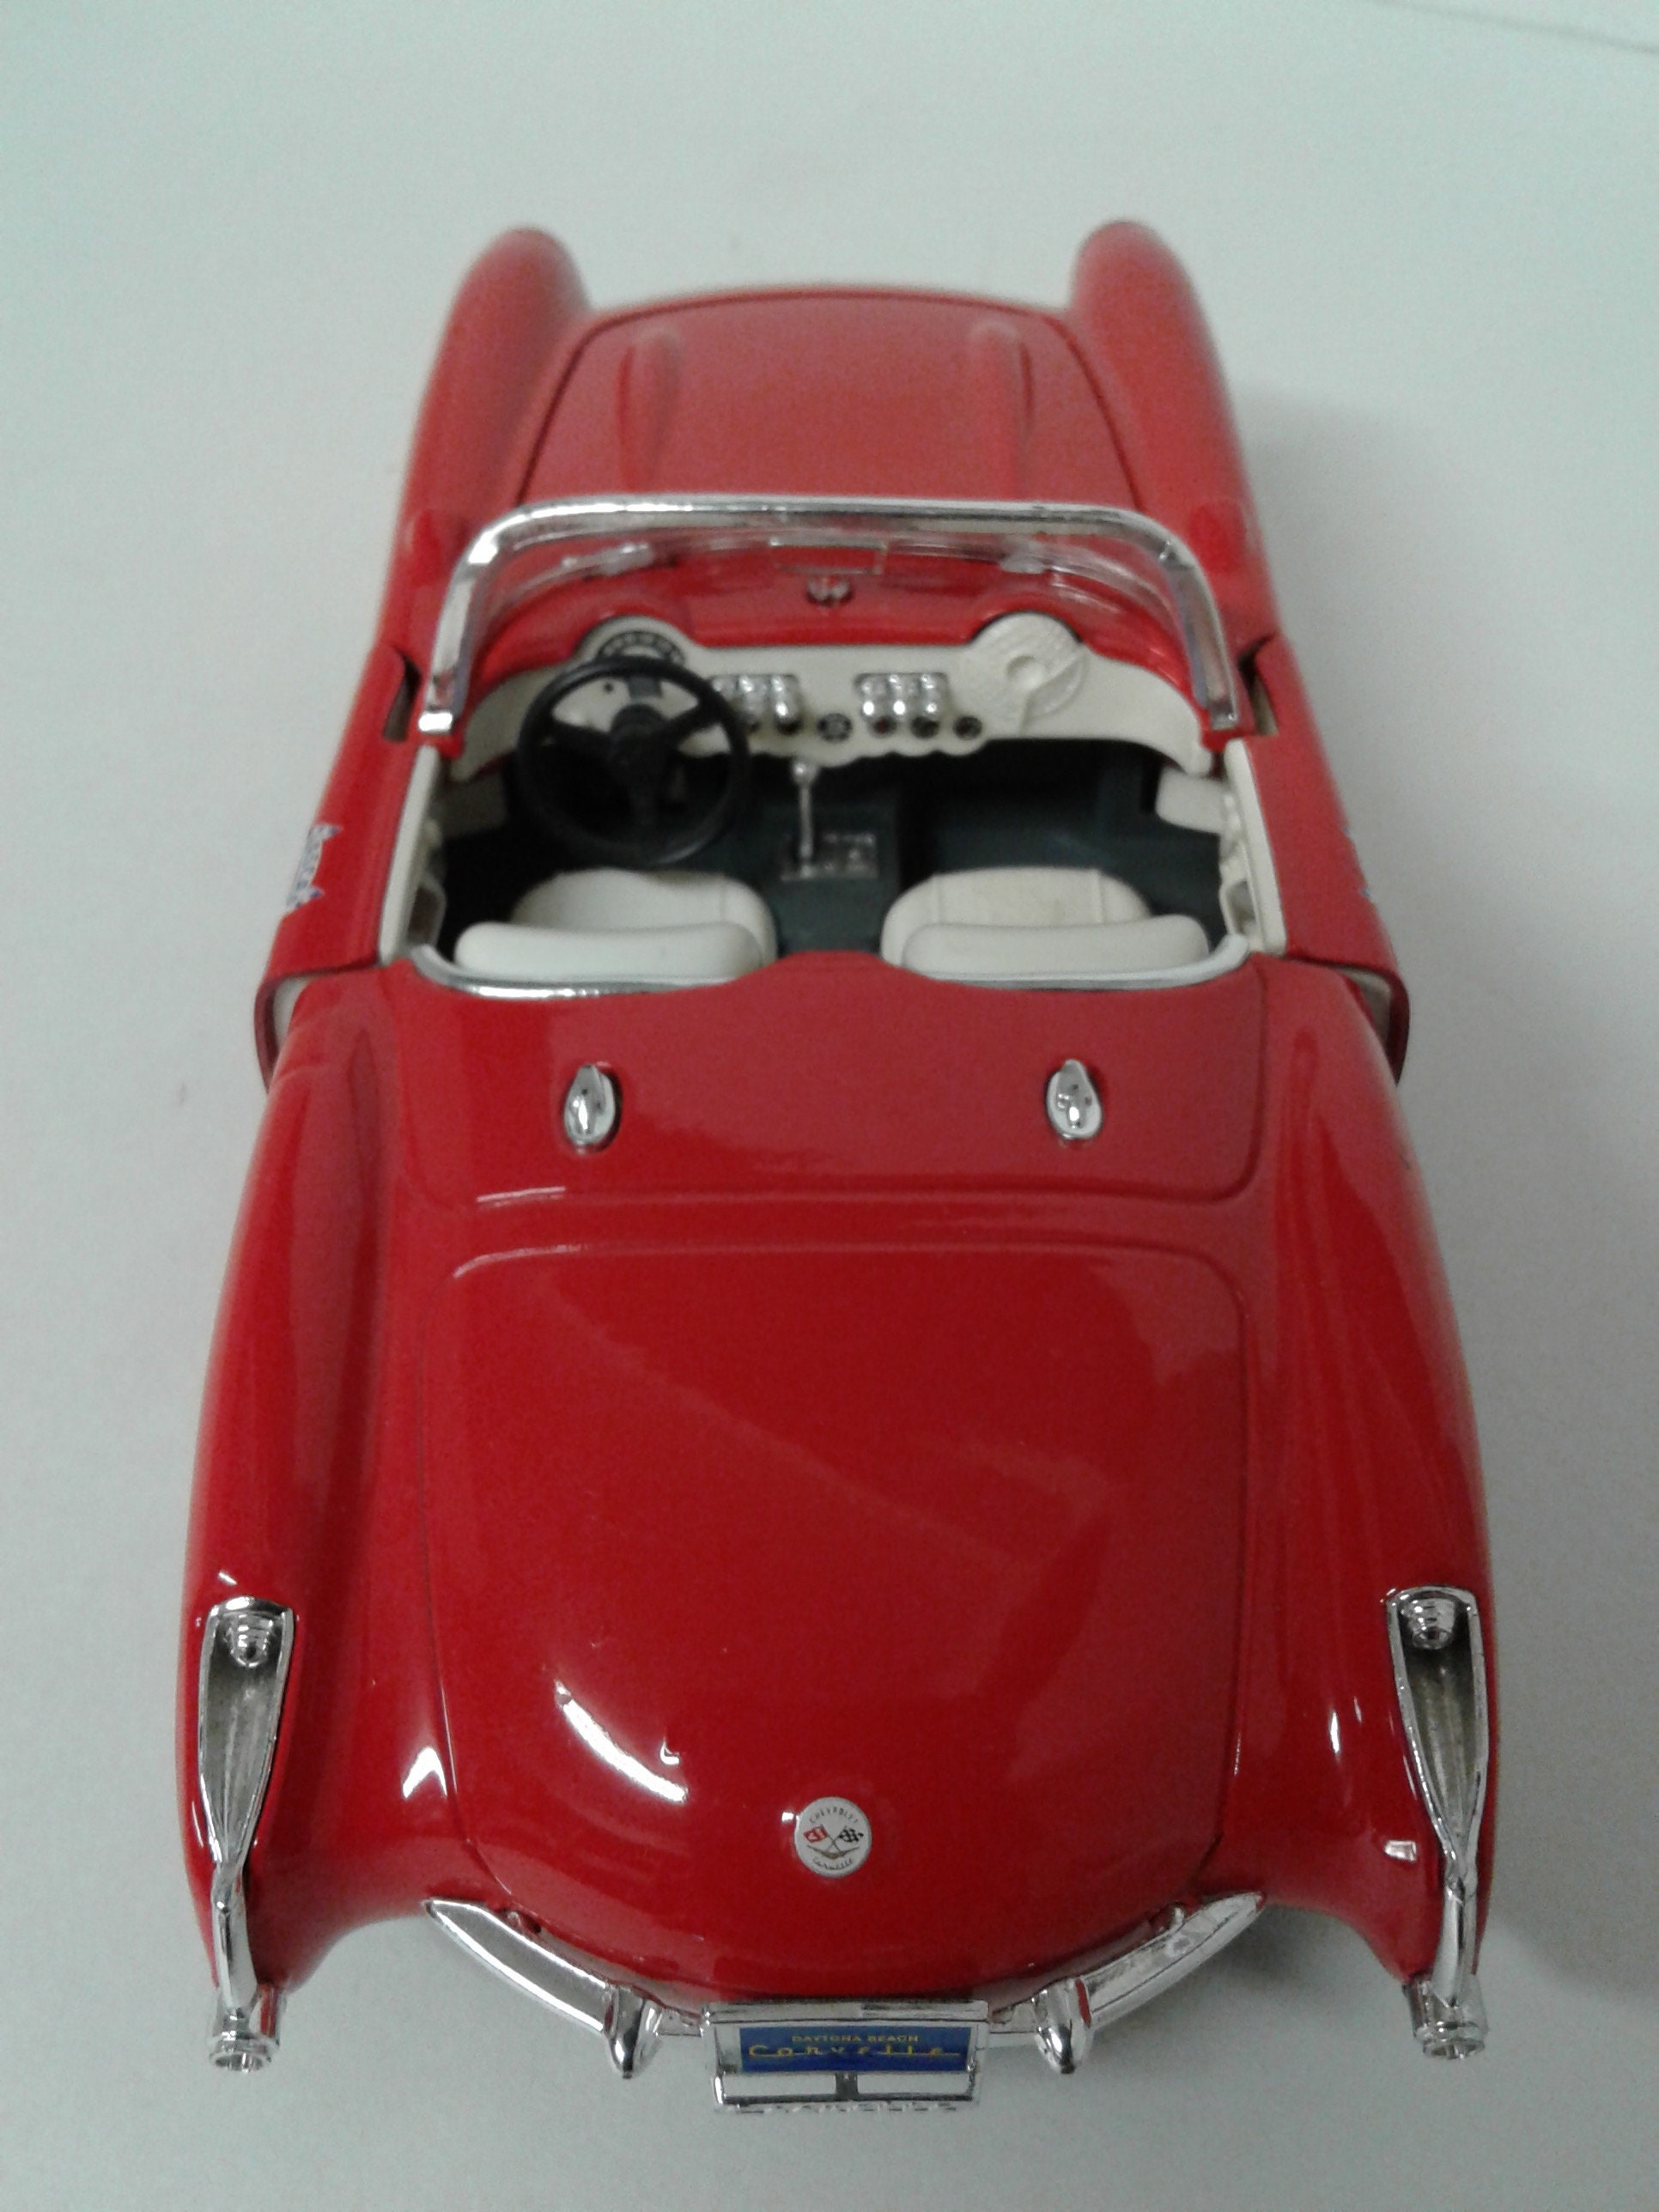  Burago 3034br 1957 Chevrolet Corvette - Red and Black